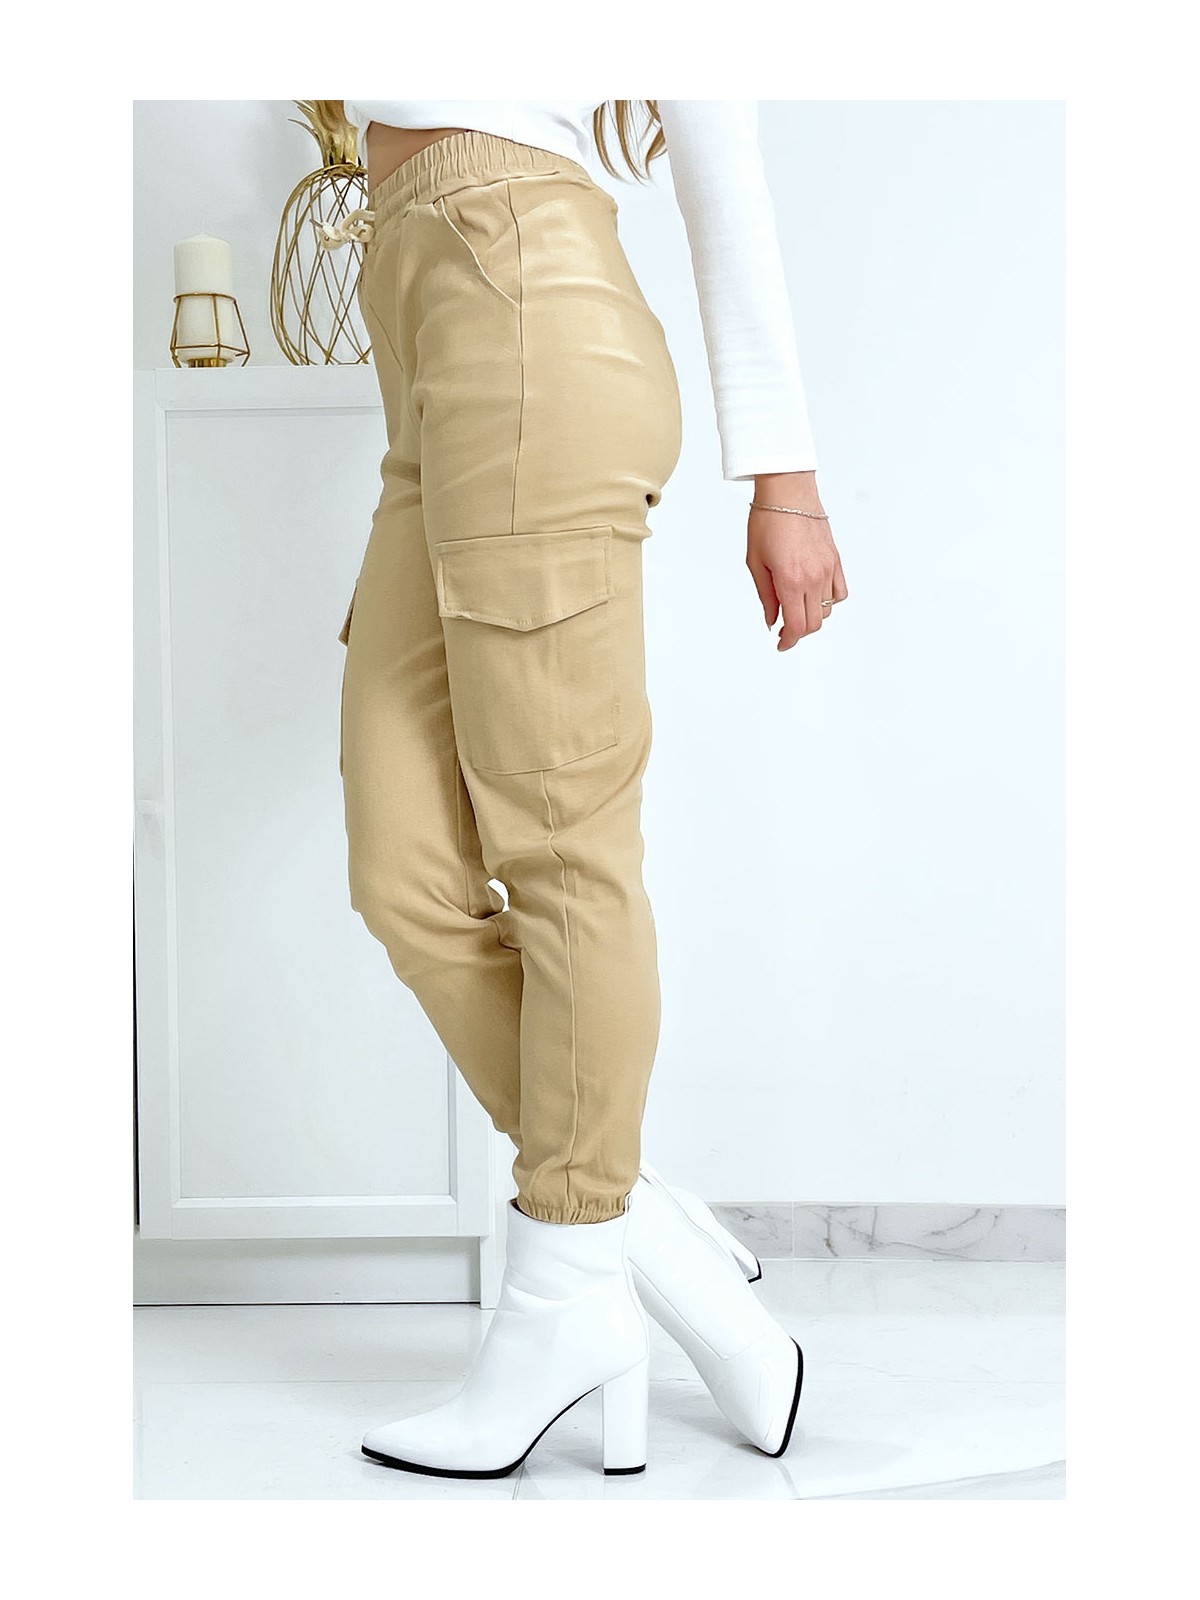 Pantalon treillis beige en strech avec poches - 6